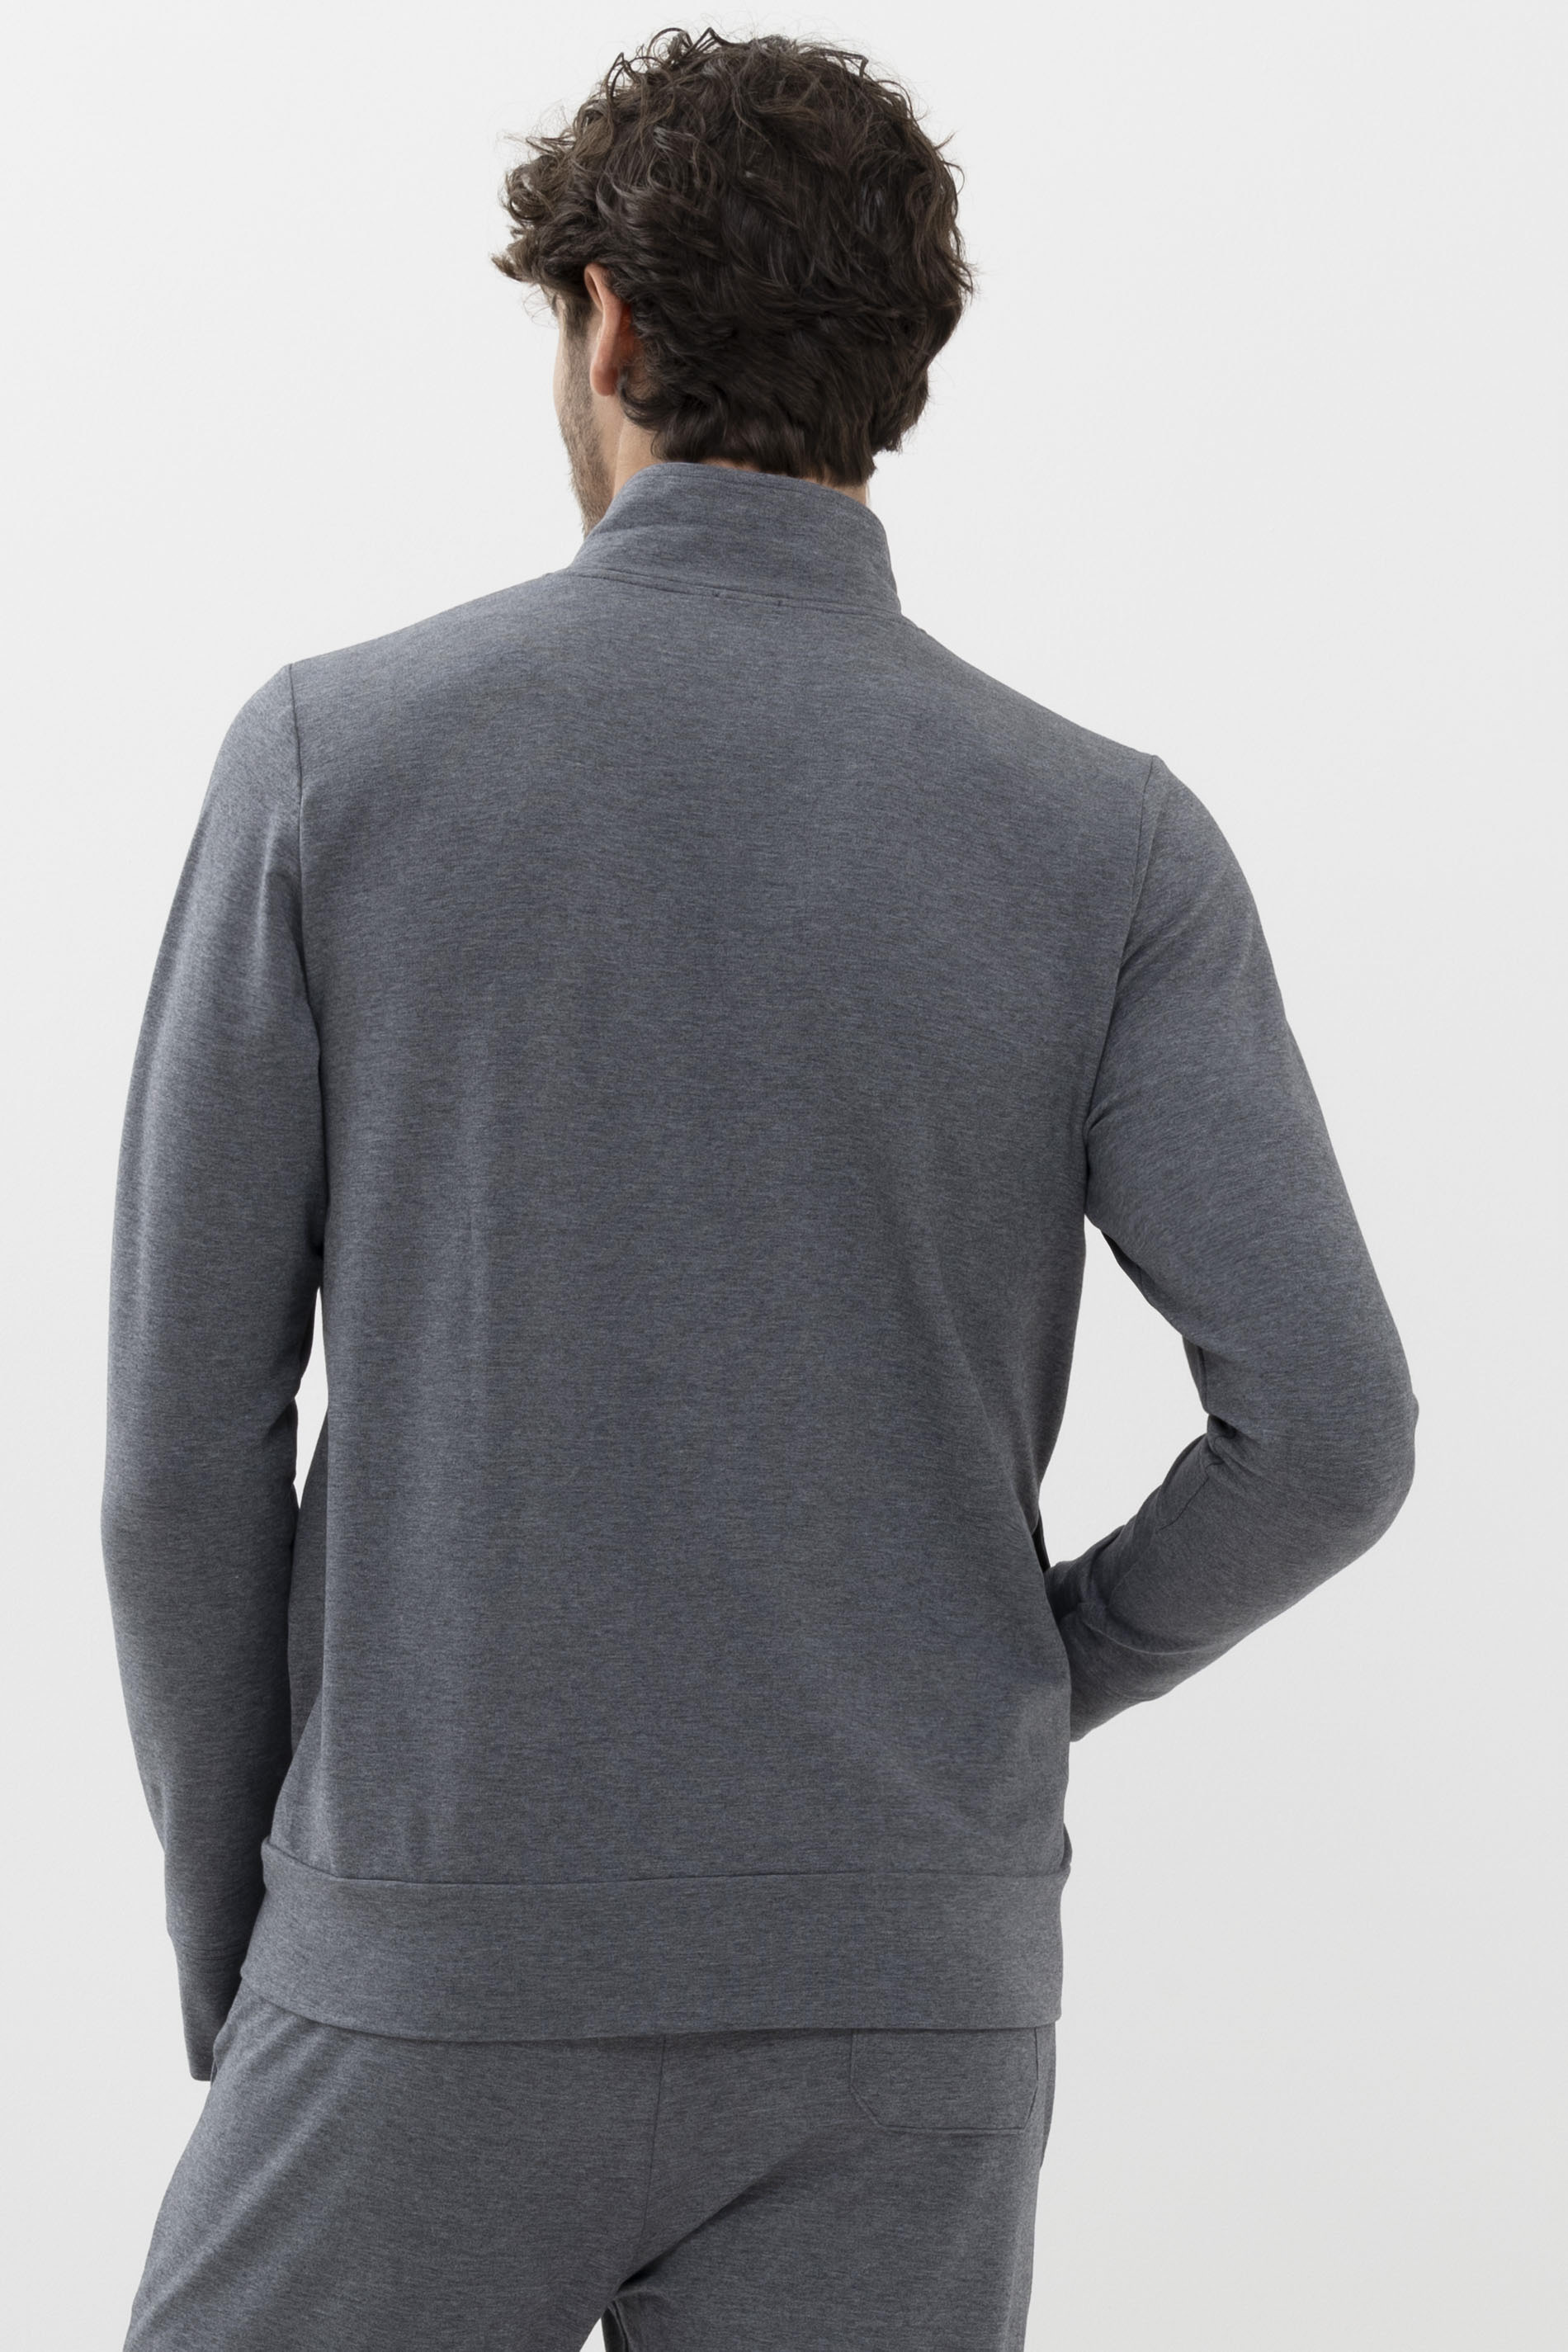 Zip jacket Quartz Melange Serie Enjoy Rear View | mey®